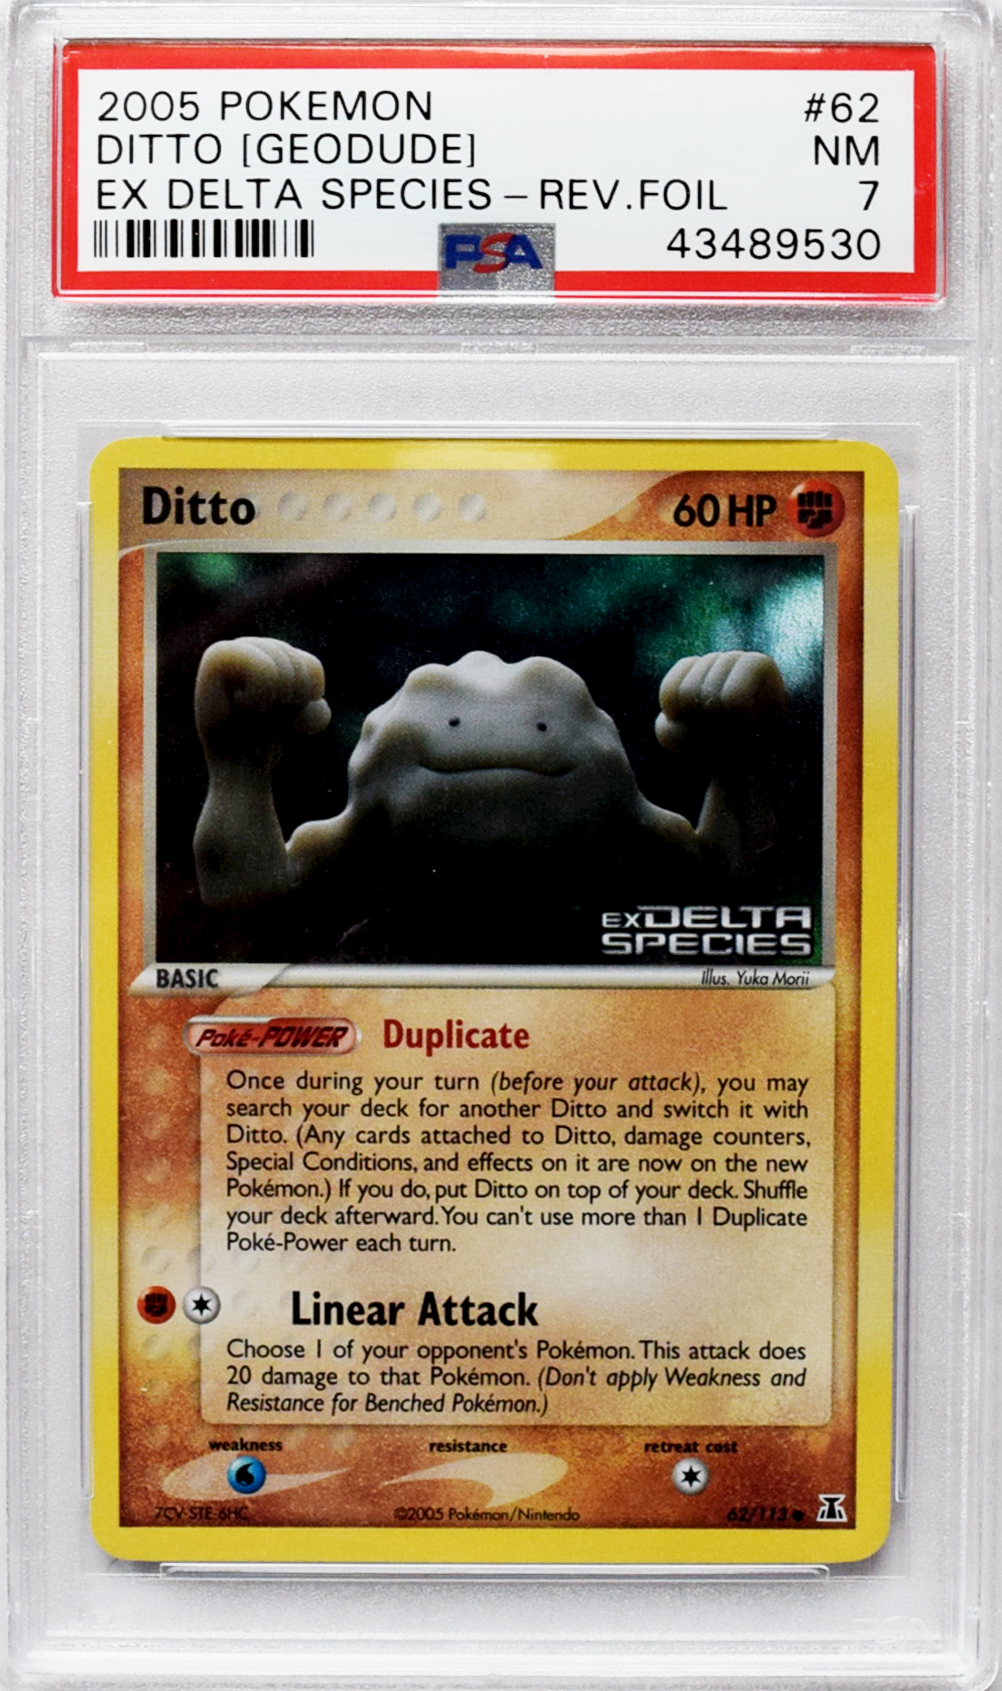 2005 Pokemon EX Delta Species - Ditto [Geodude] (#62) - REV.FOIL - PSA 7 NM